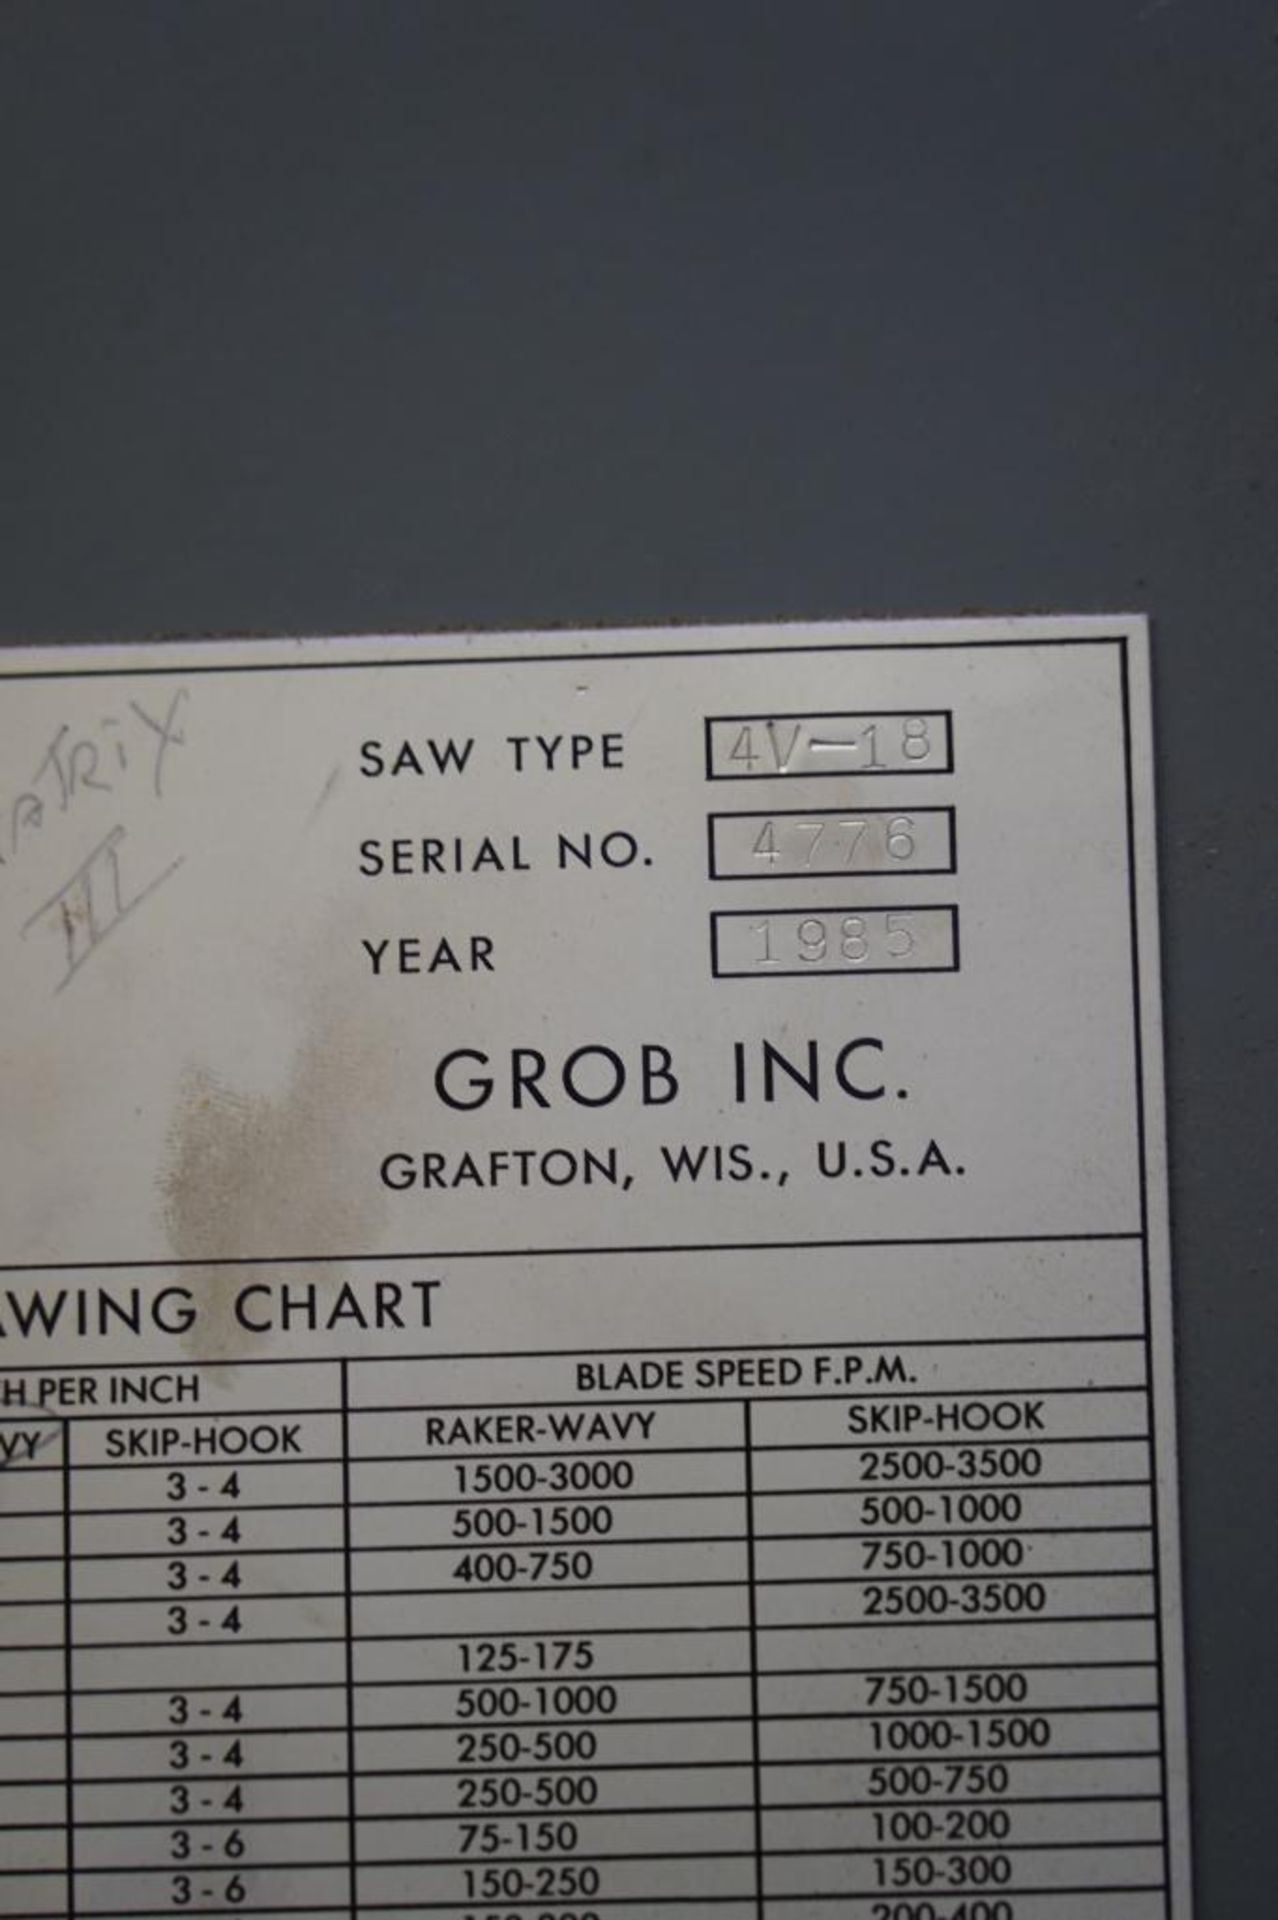 1985 Grob 4V-18 Vertical Band Saw - Image 6 of 6